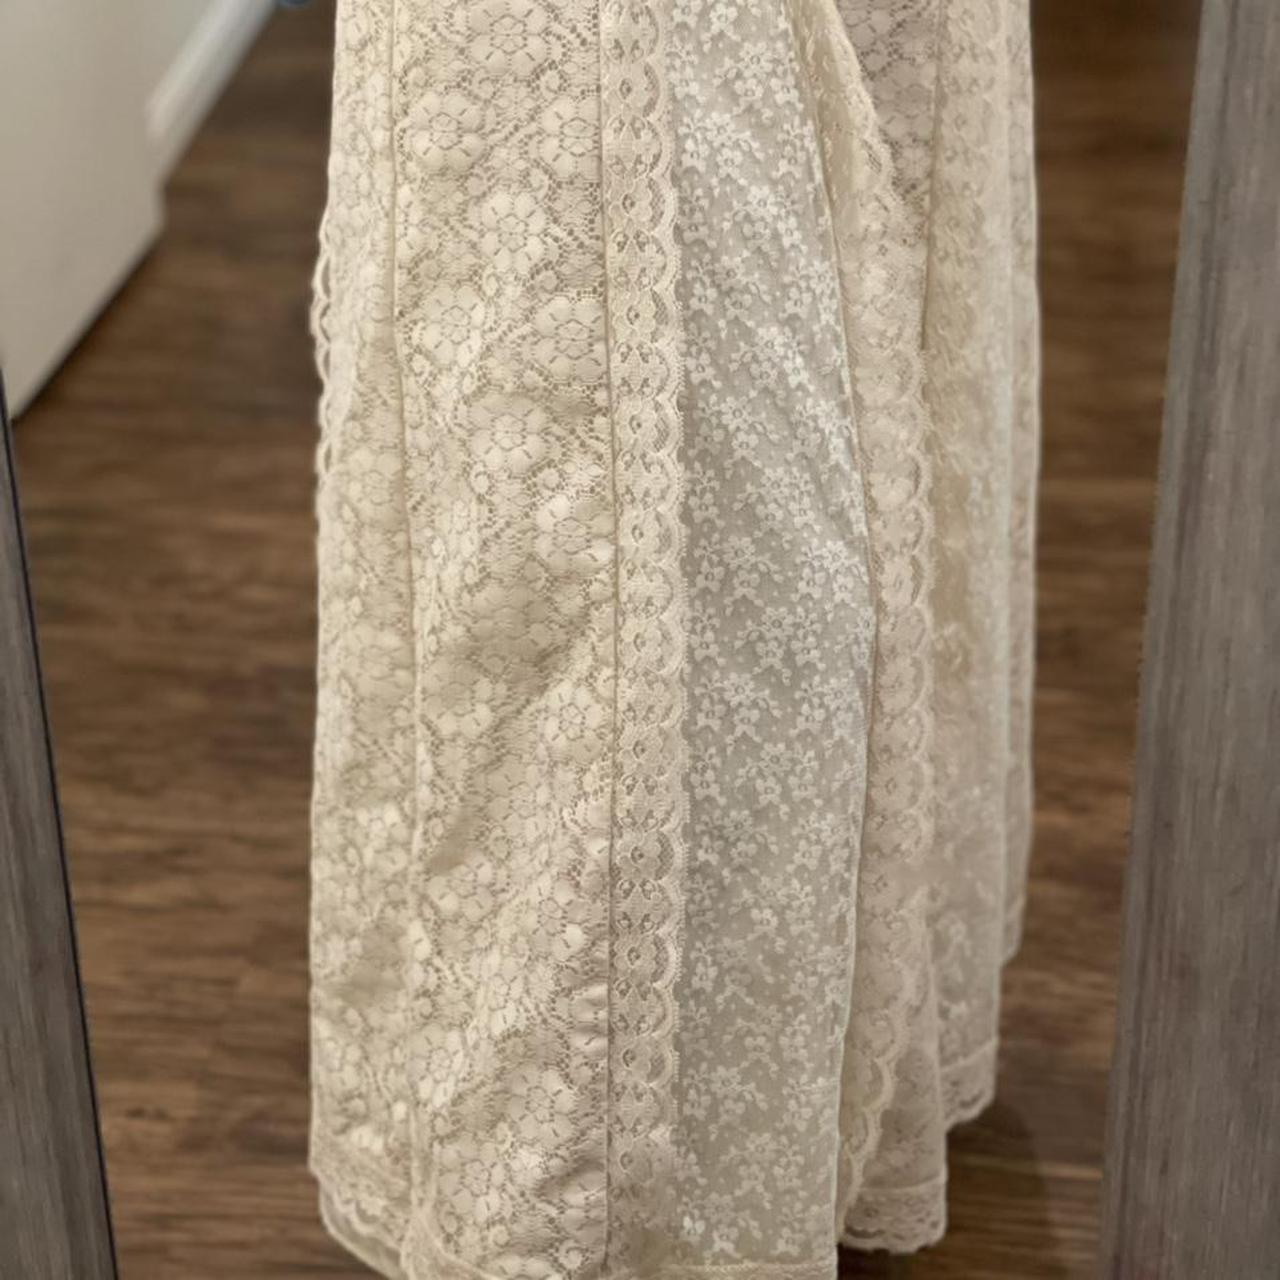 Product Image 2 - Lace maxi skirt ☁️🦋✨
Beautiful lace